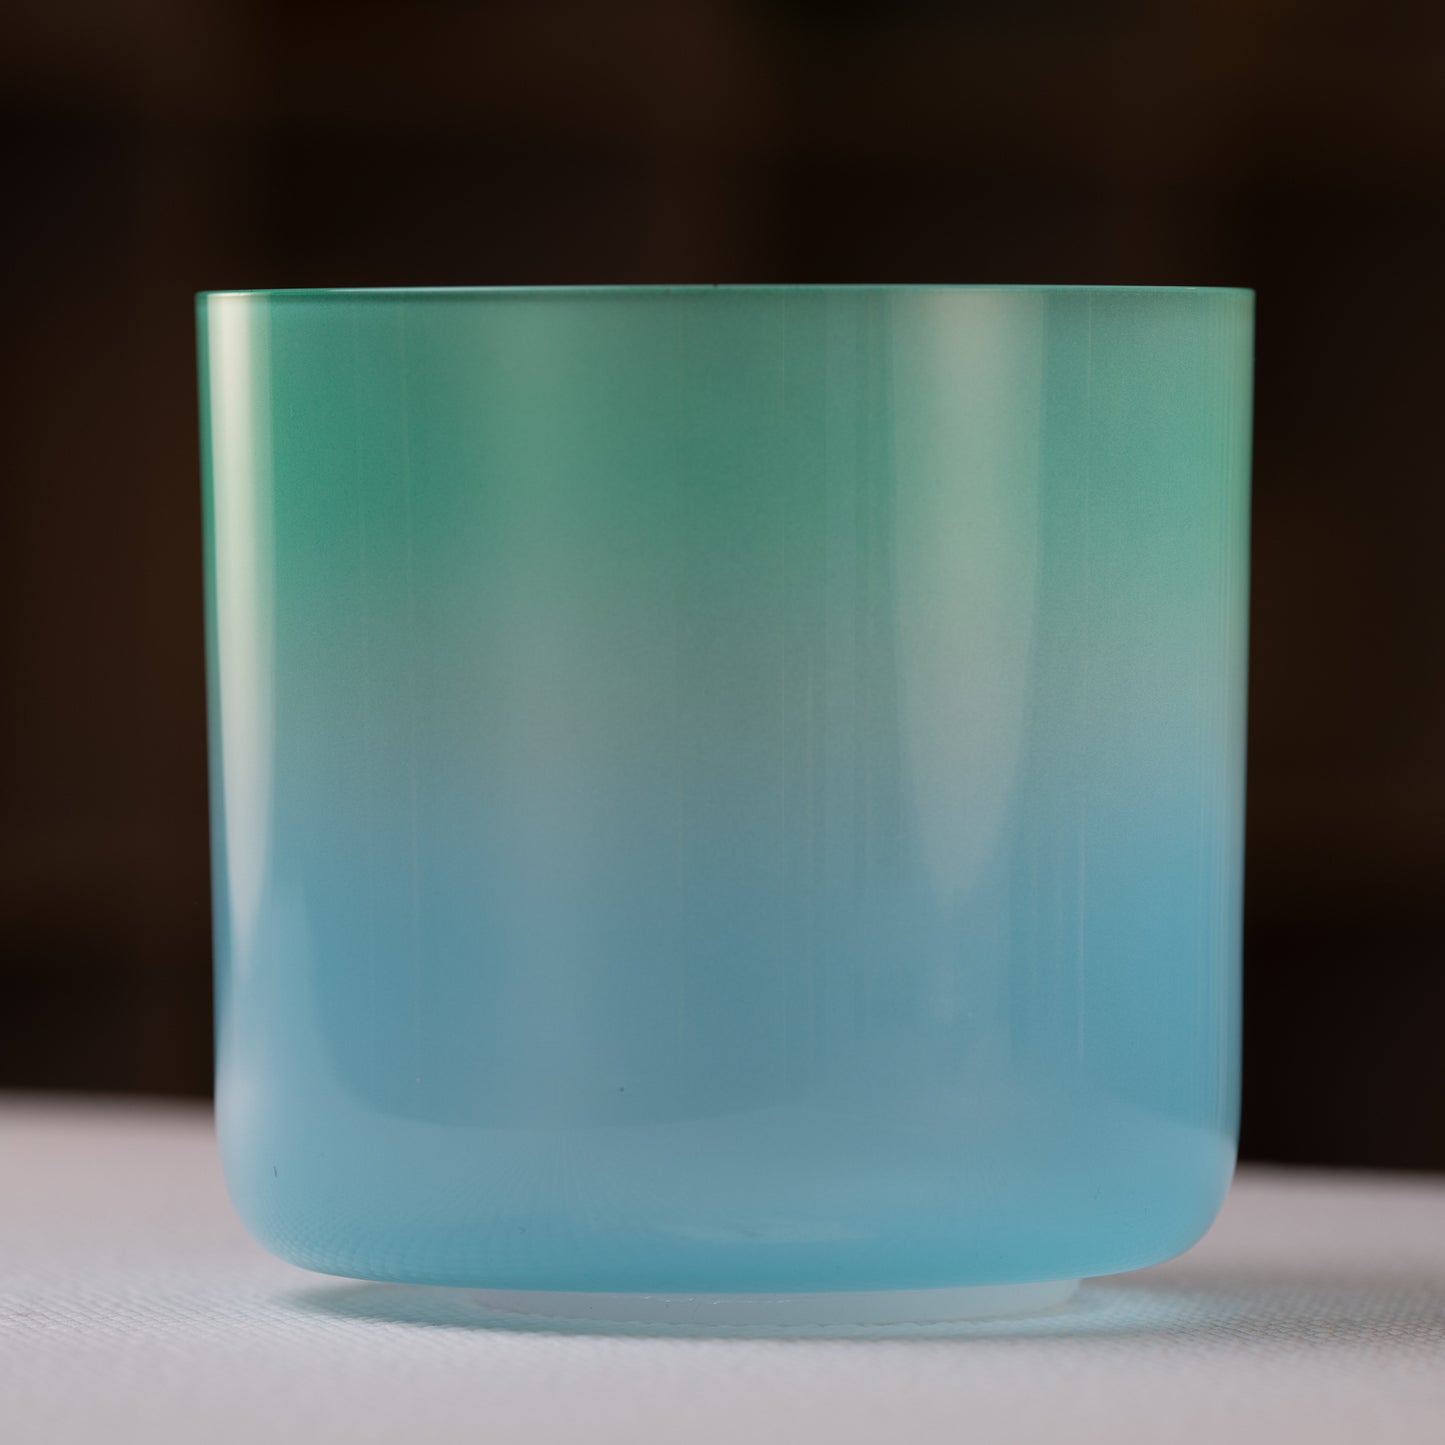 6" F#-35 Blue Green Tourmaline Color Crystal Singing Bowl, Sacred Singing Bowls